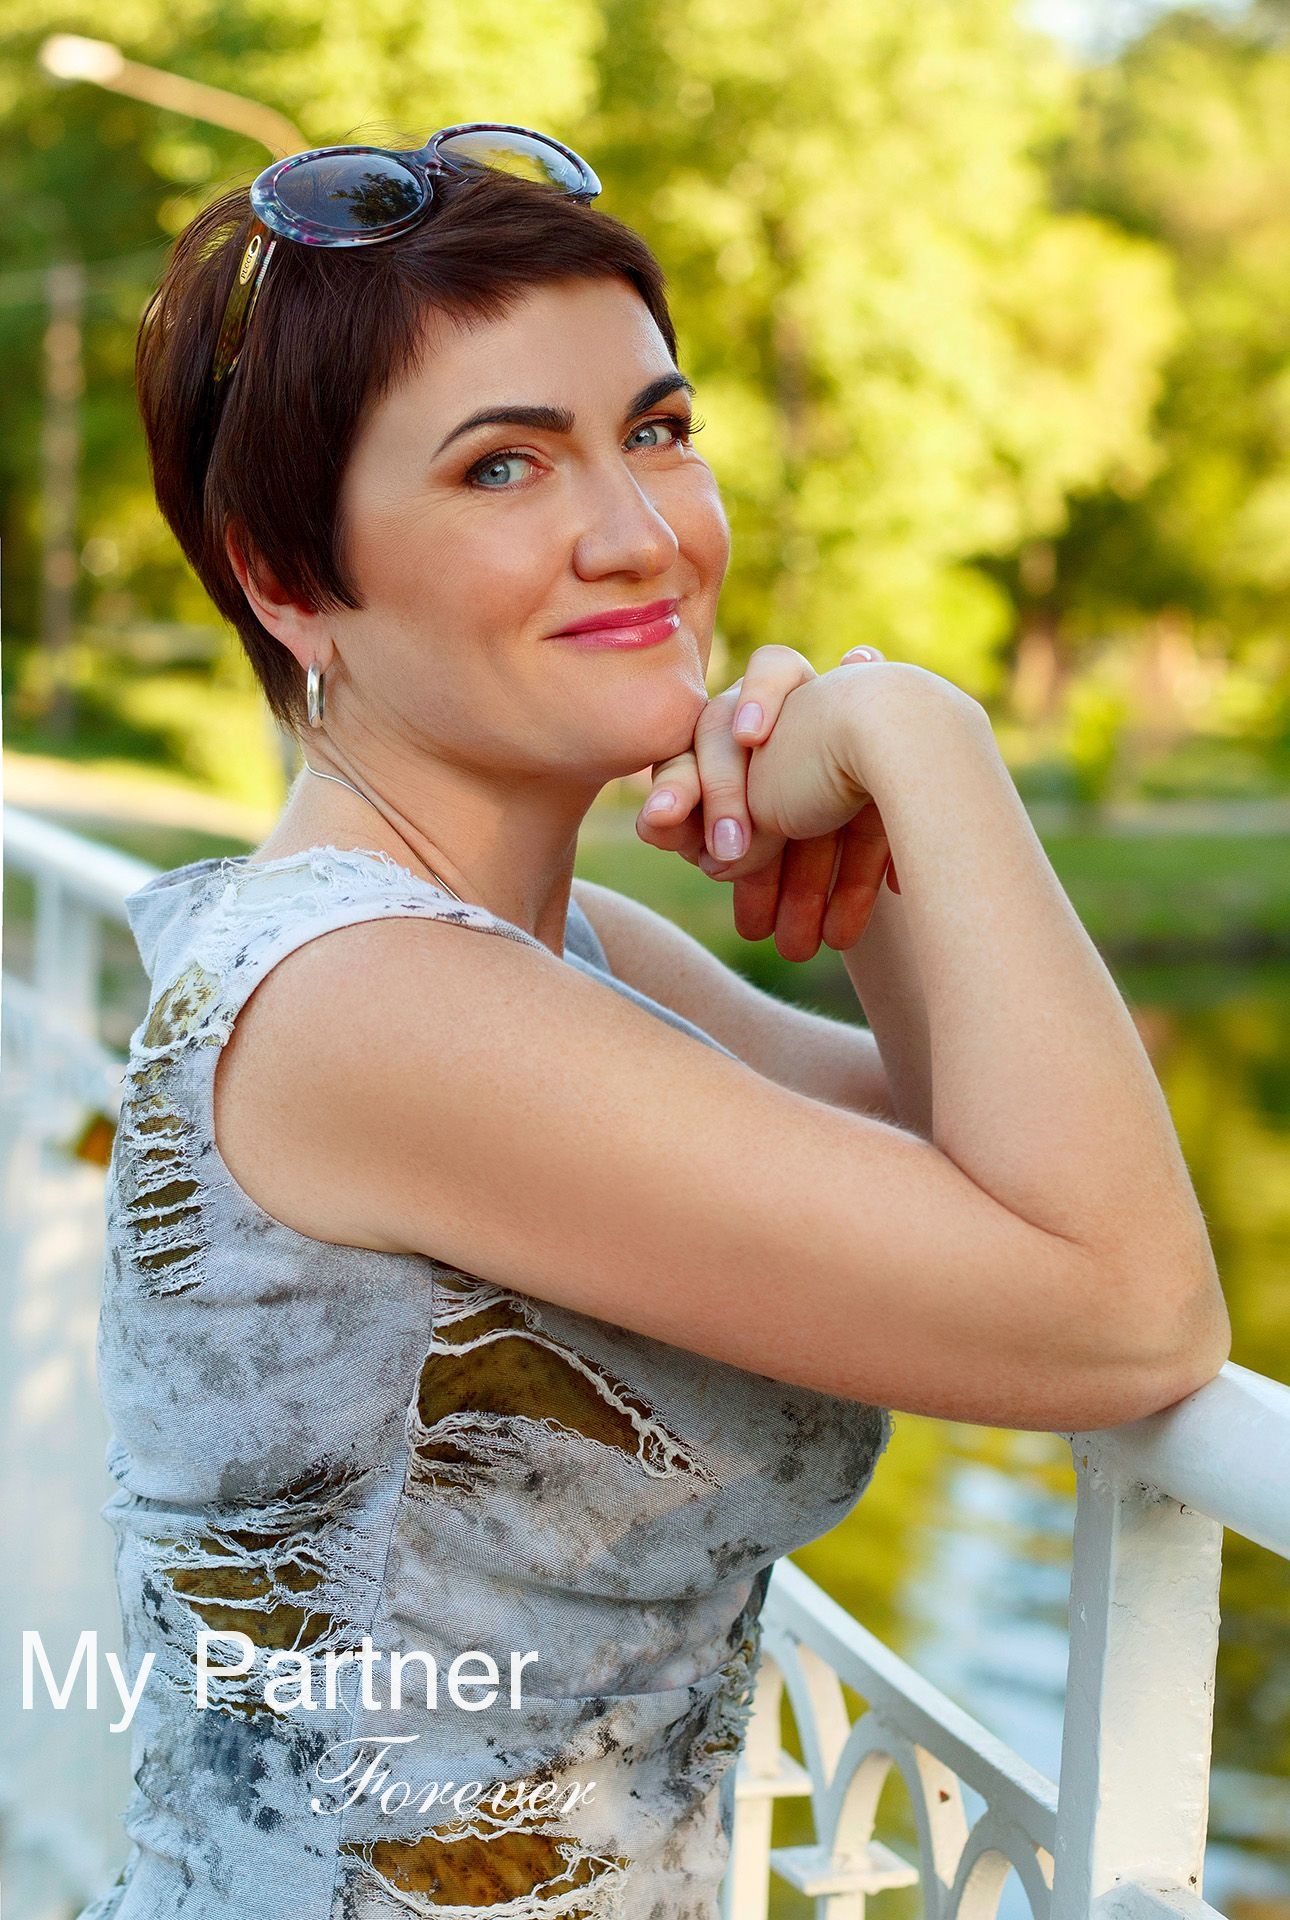 Dating Service to Meet Single Ukrainian Woman Elena from Zaporozhye, Ukraine